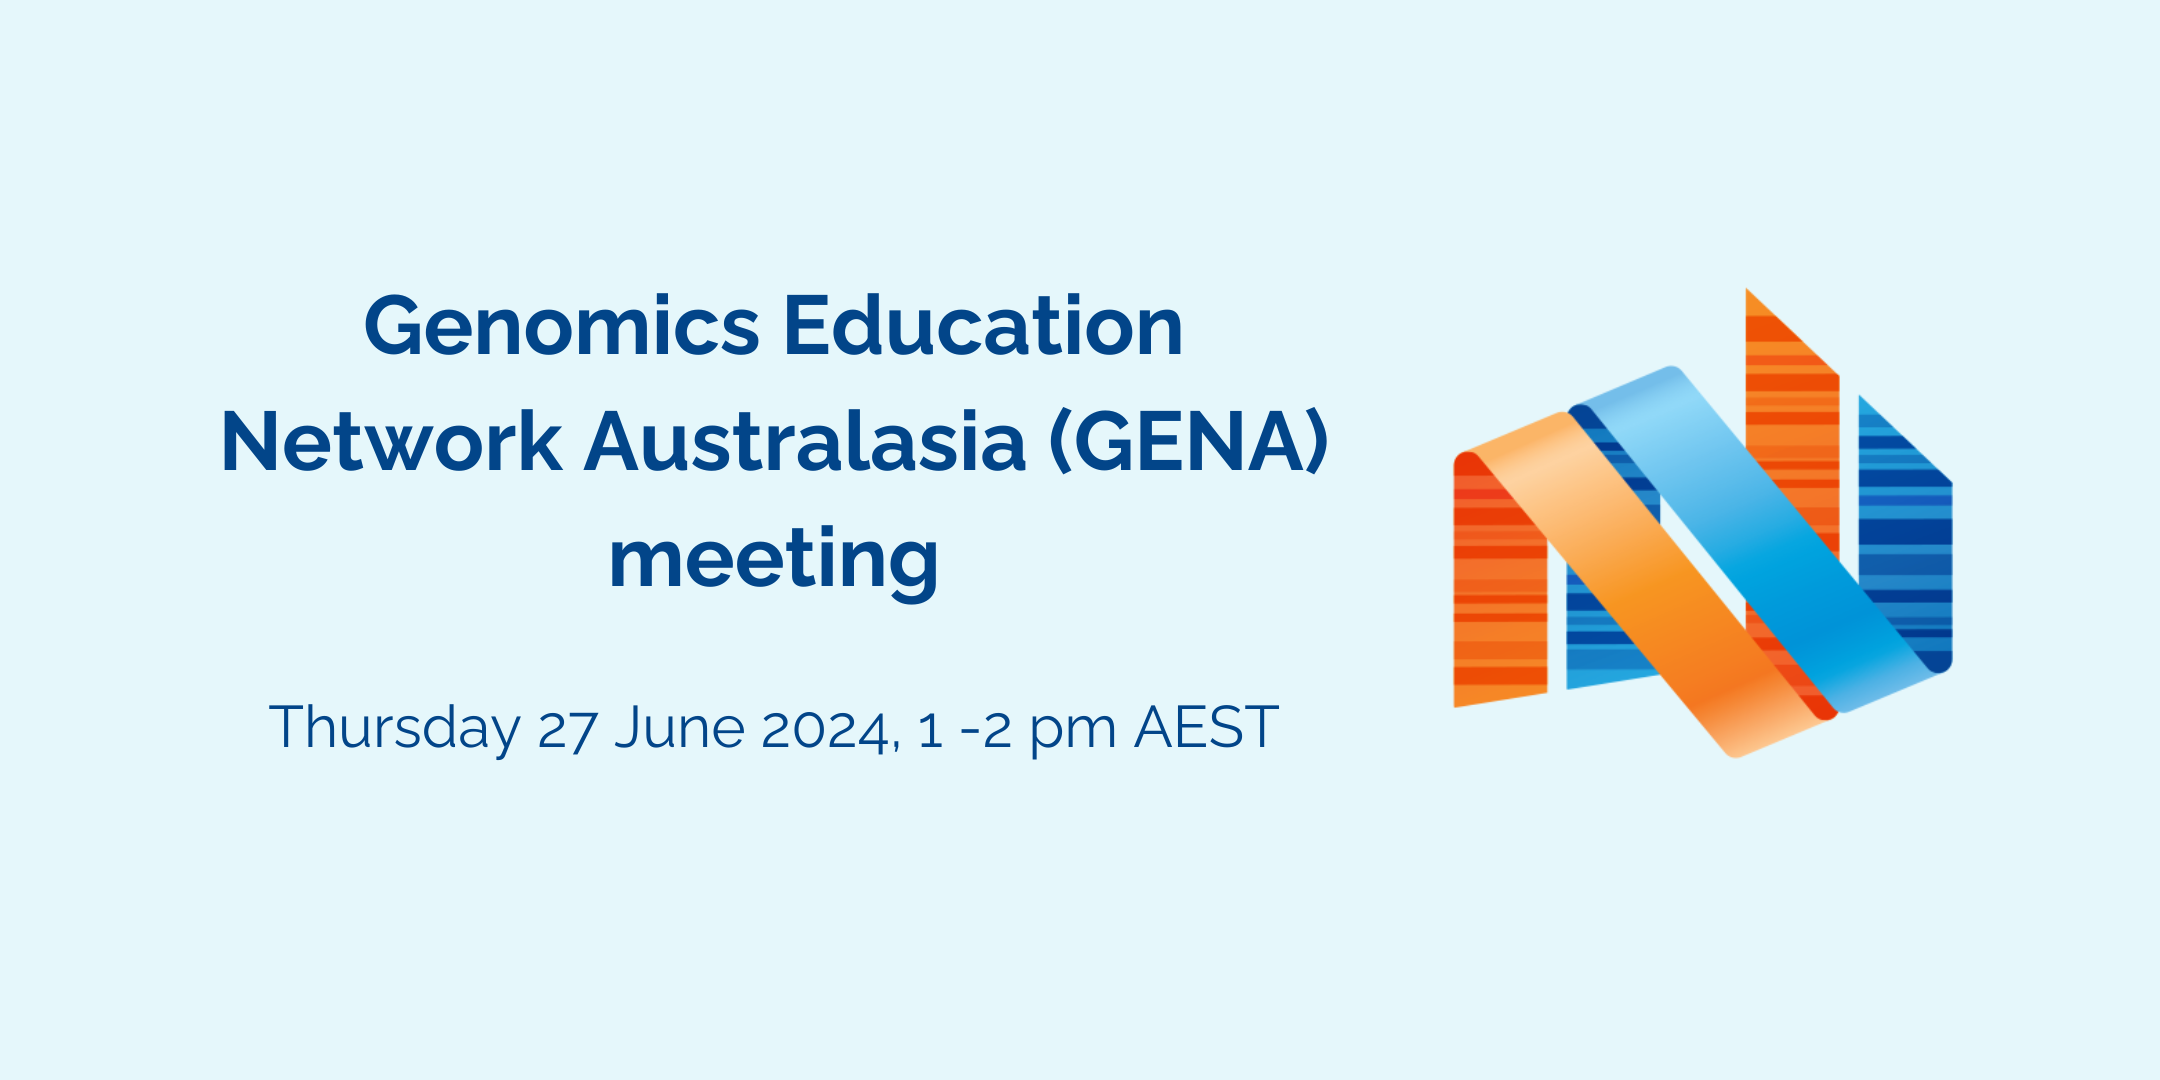 Genomics Education Network Australasia (GENA) meeting on Thursday 27 June 2024 at 1pm (AEST).